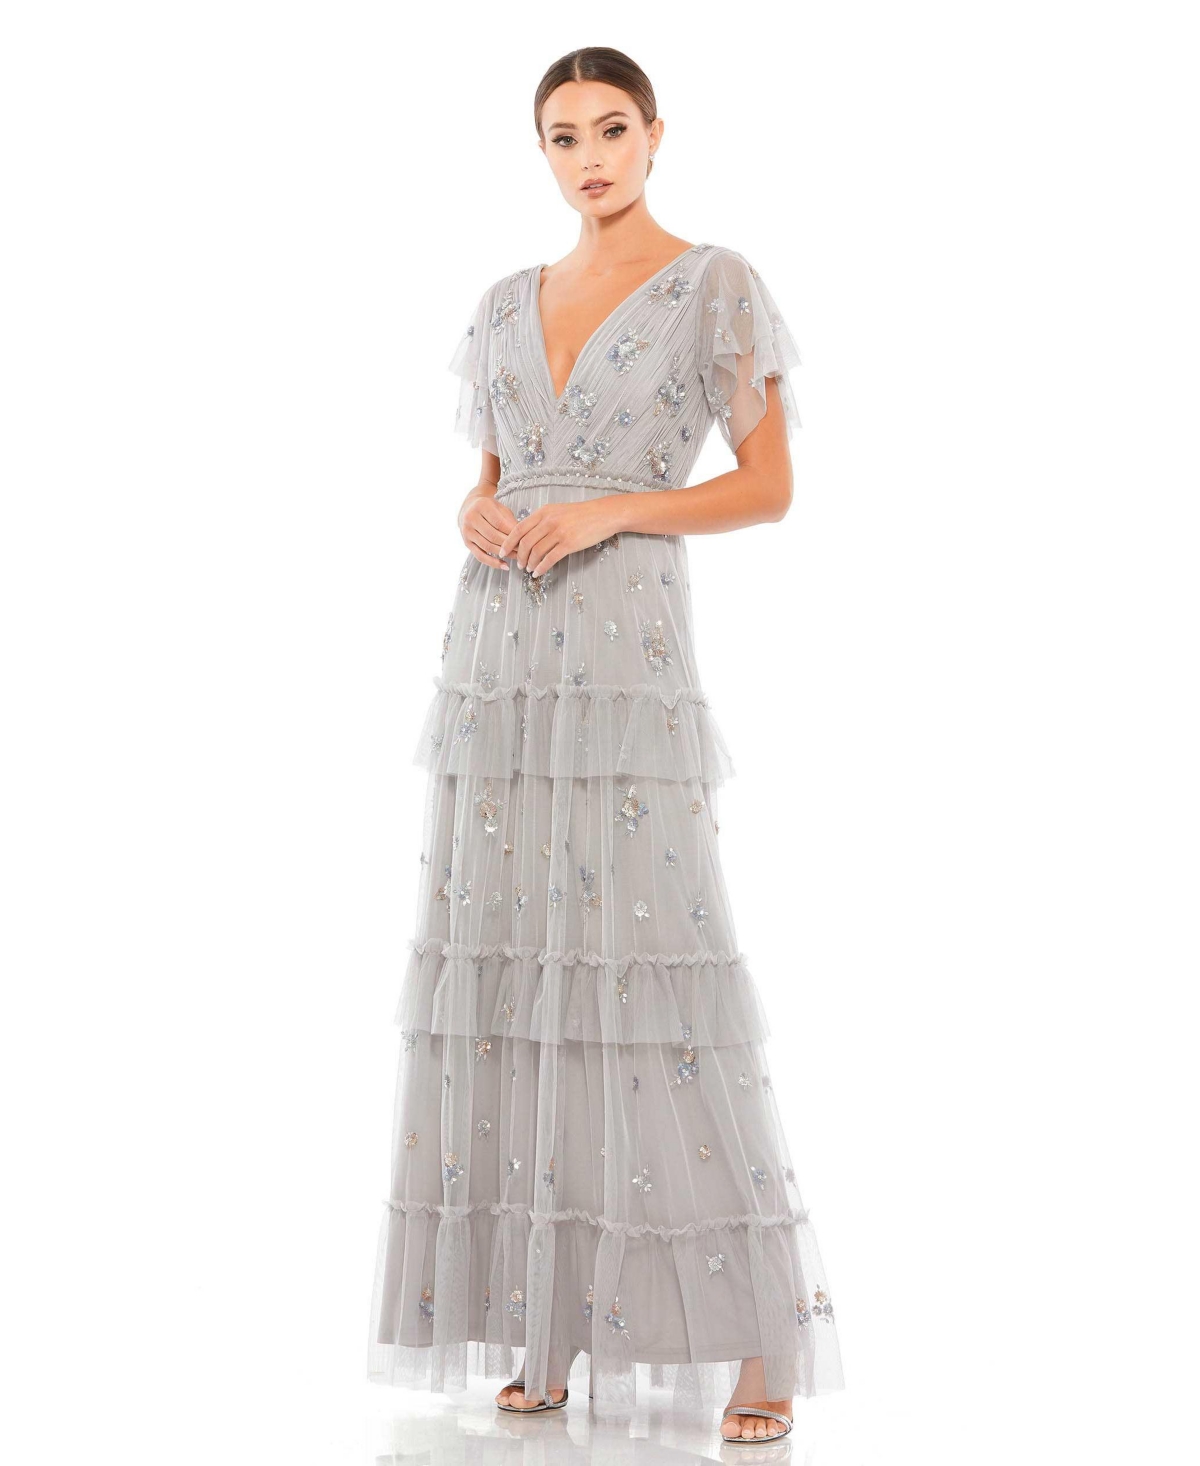 Buy Boardwalk Empire Inspired Dresses Womens Ruffle Tiered Embellished Flutter Sleeve Gown - Platinum $598.00 AT vintagedancer.com